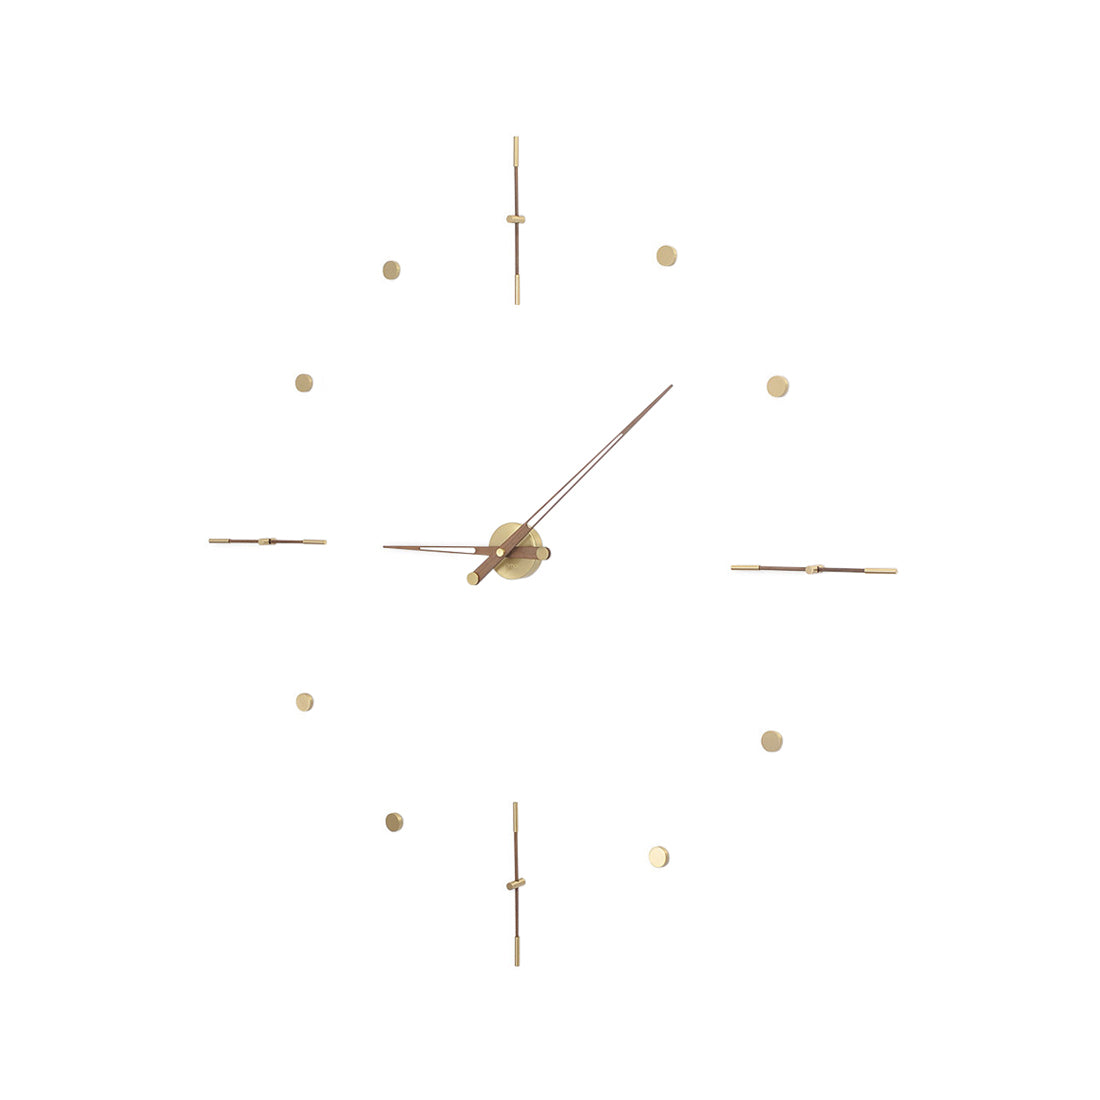 Mixto Wall Clock: Medium - 49.2